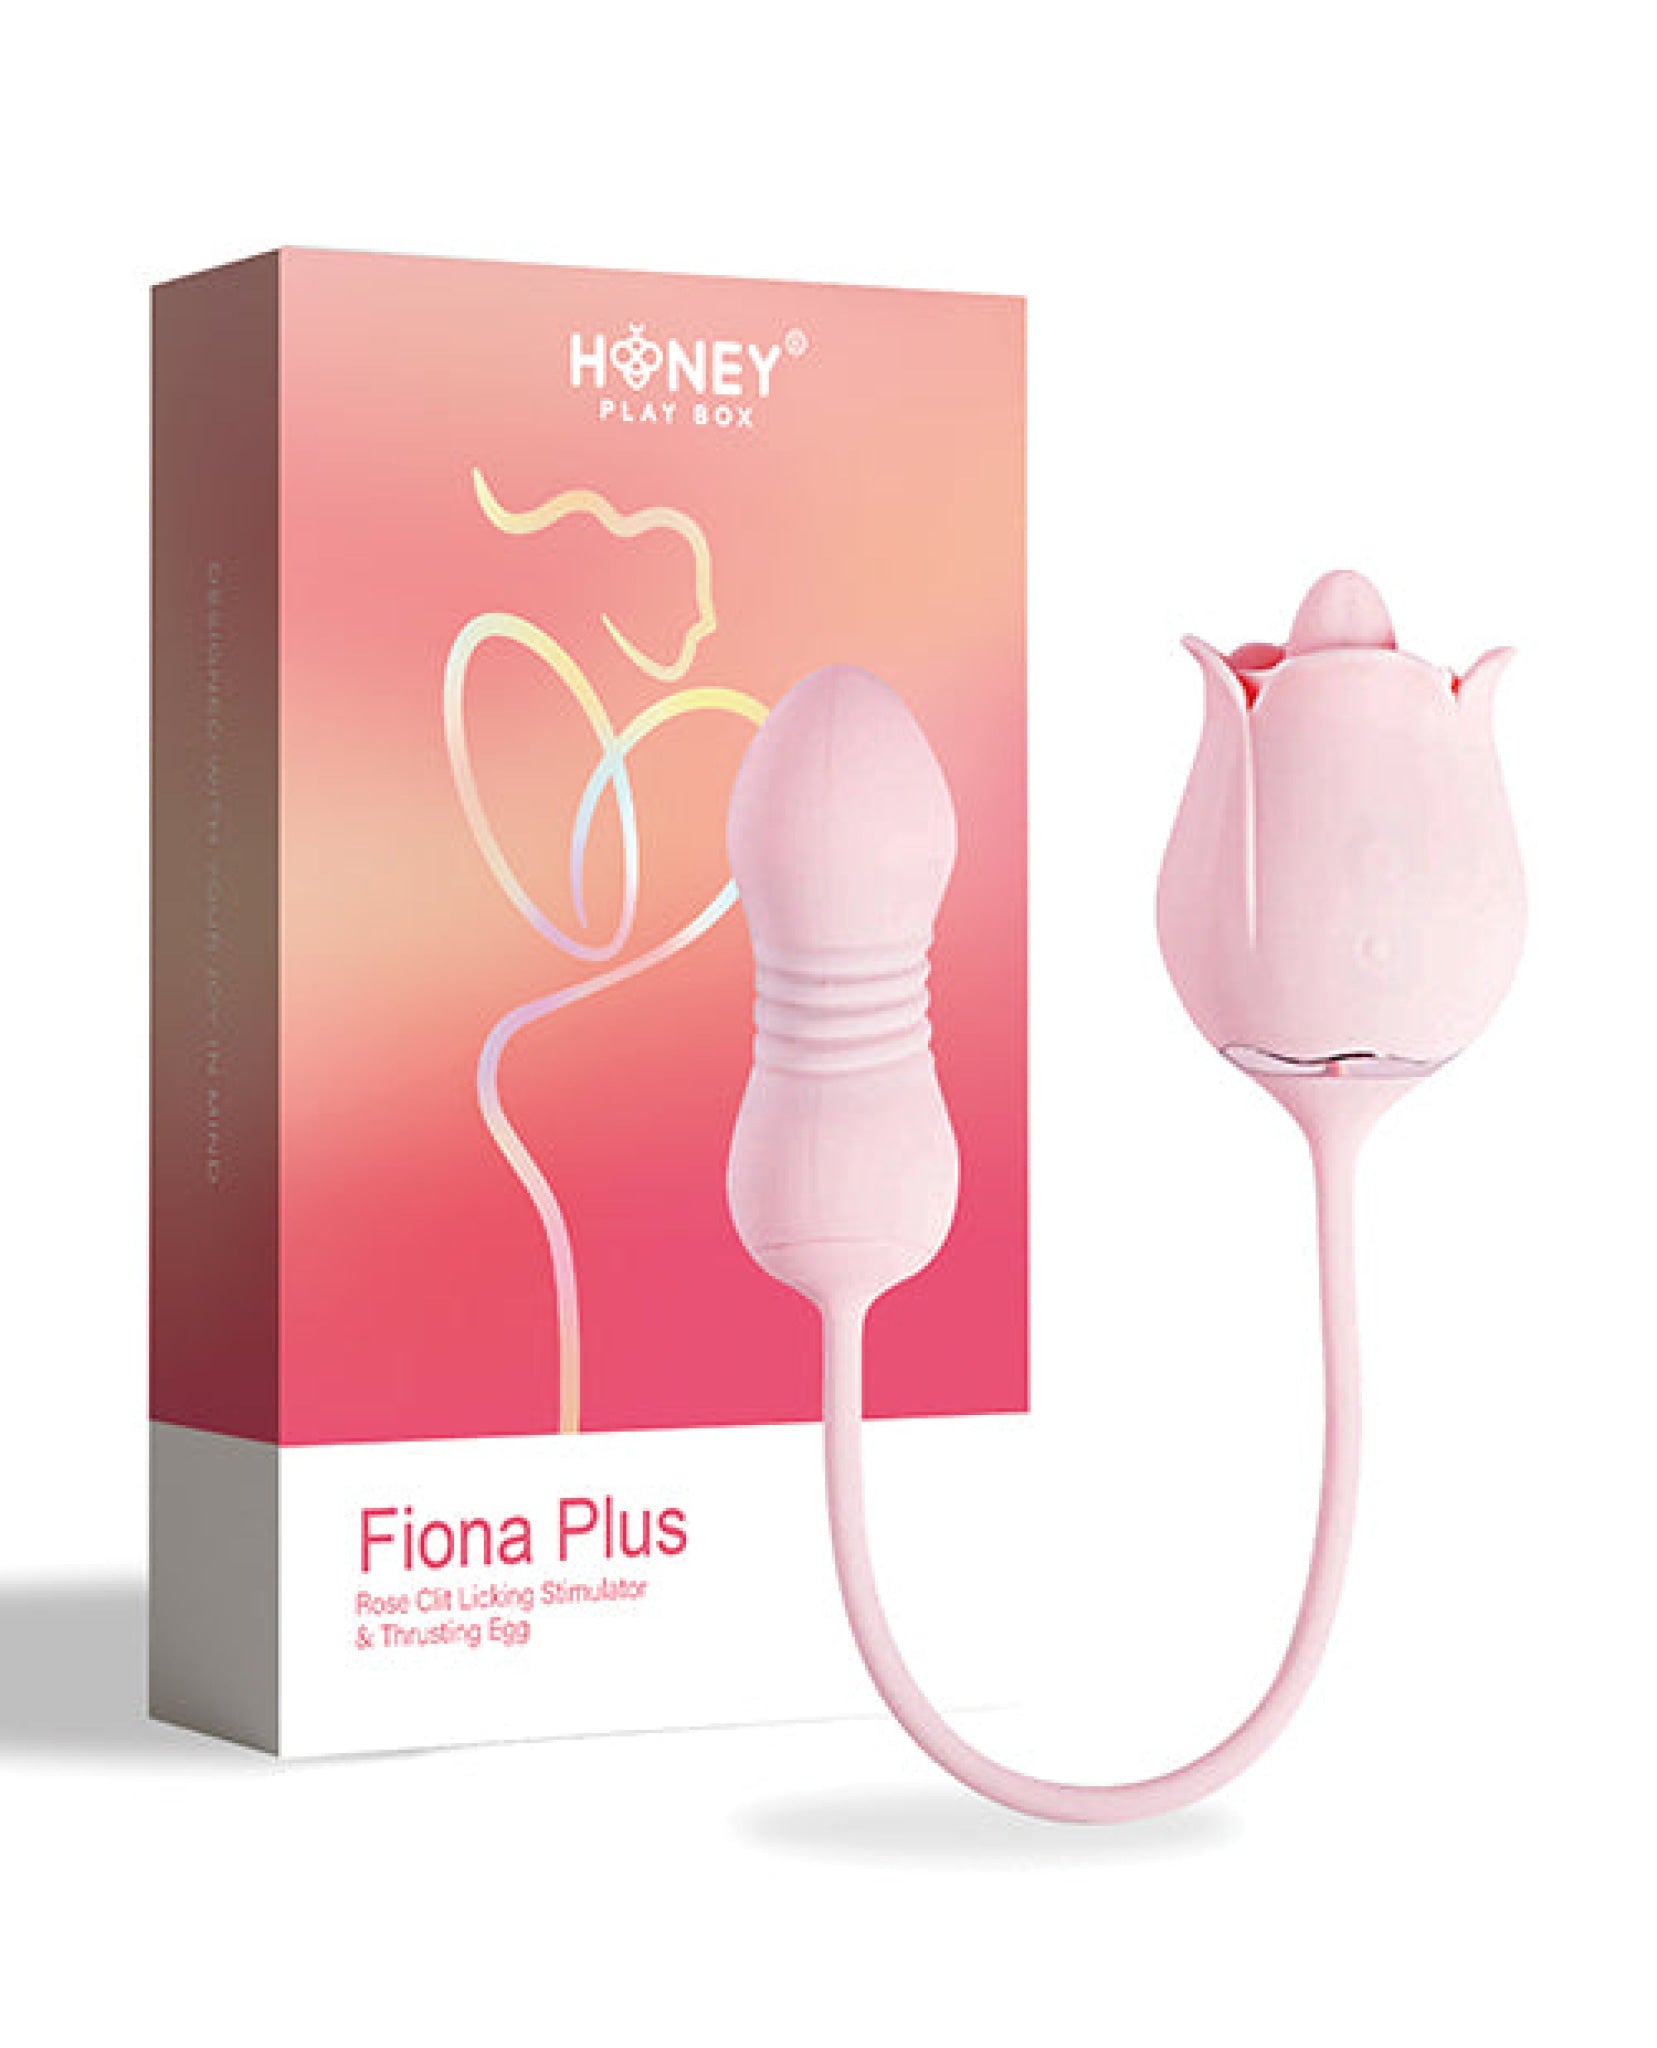 Fiona Plus Rose Clit Licking Stimulator & Thrusting Egg Uc Global Trade